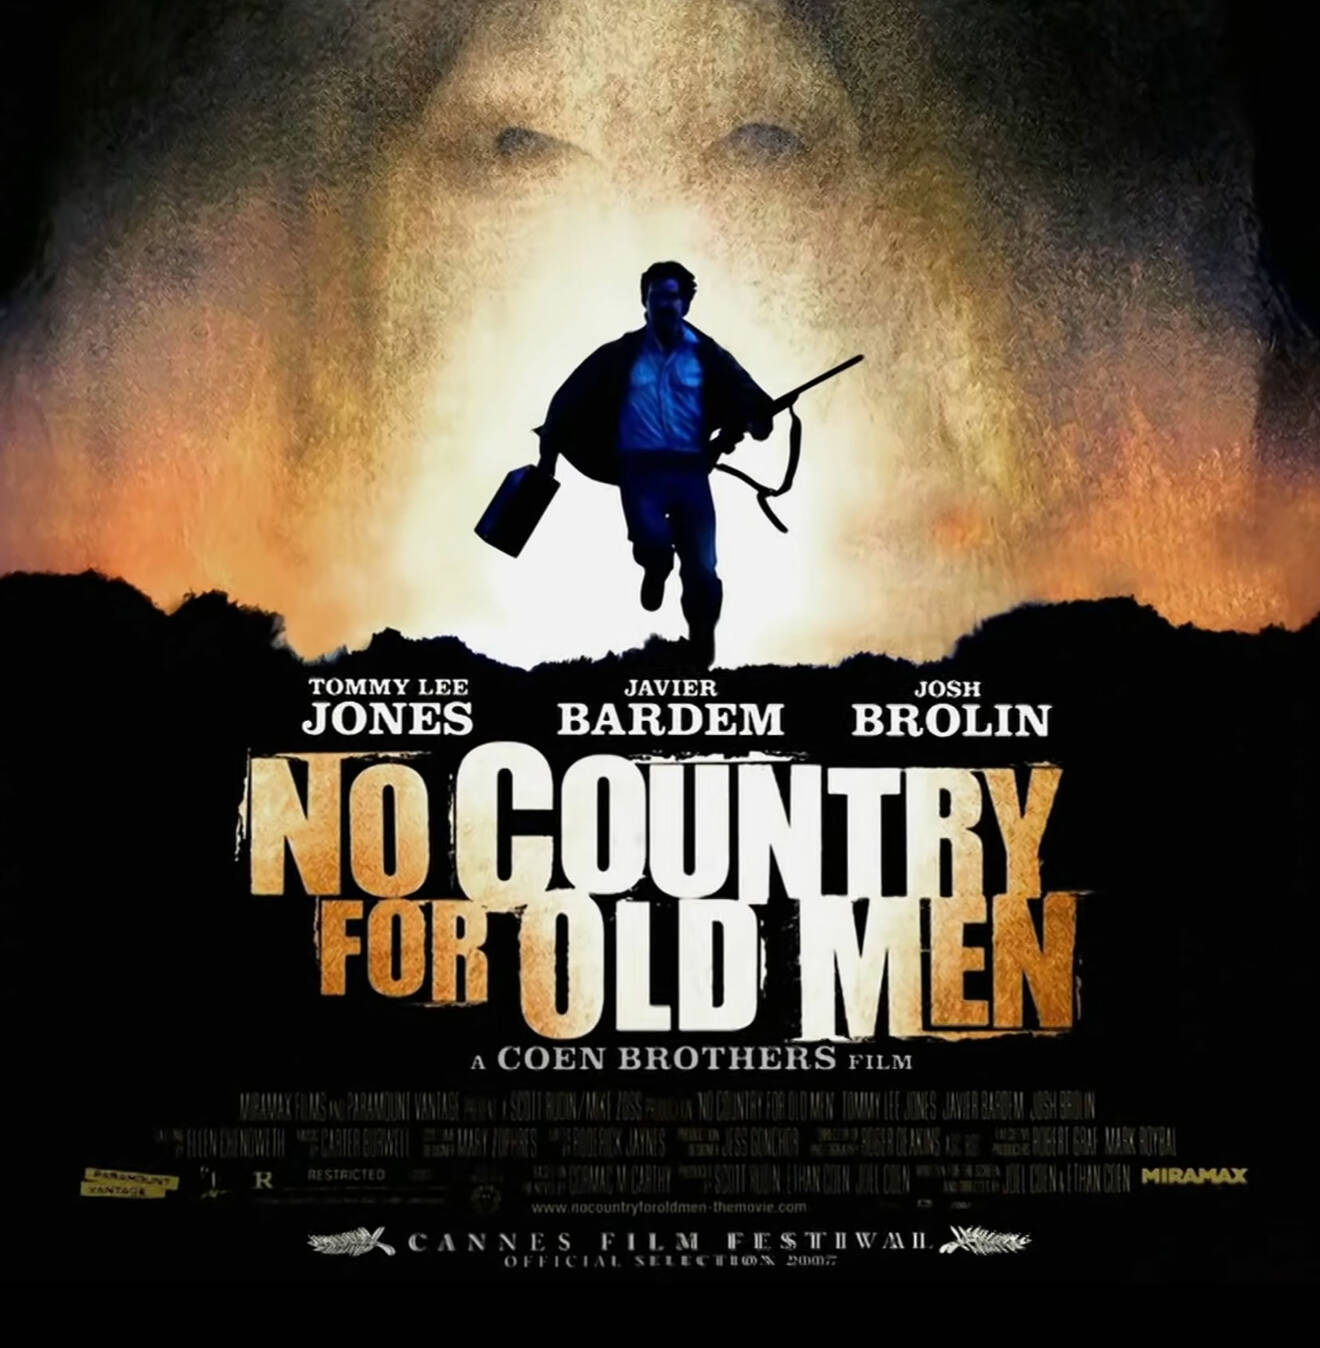 Filmen No country for old men innehöll en ledtråd